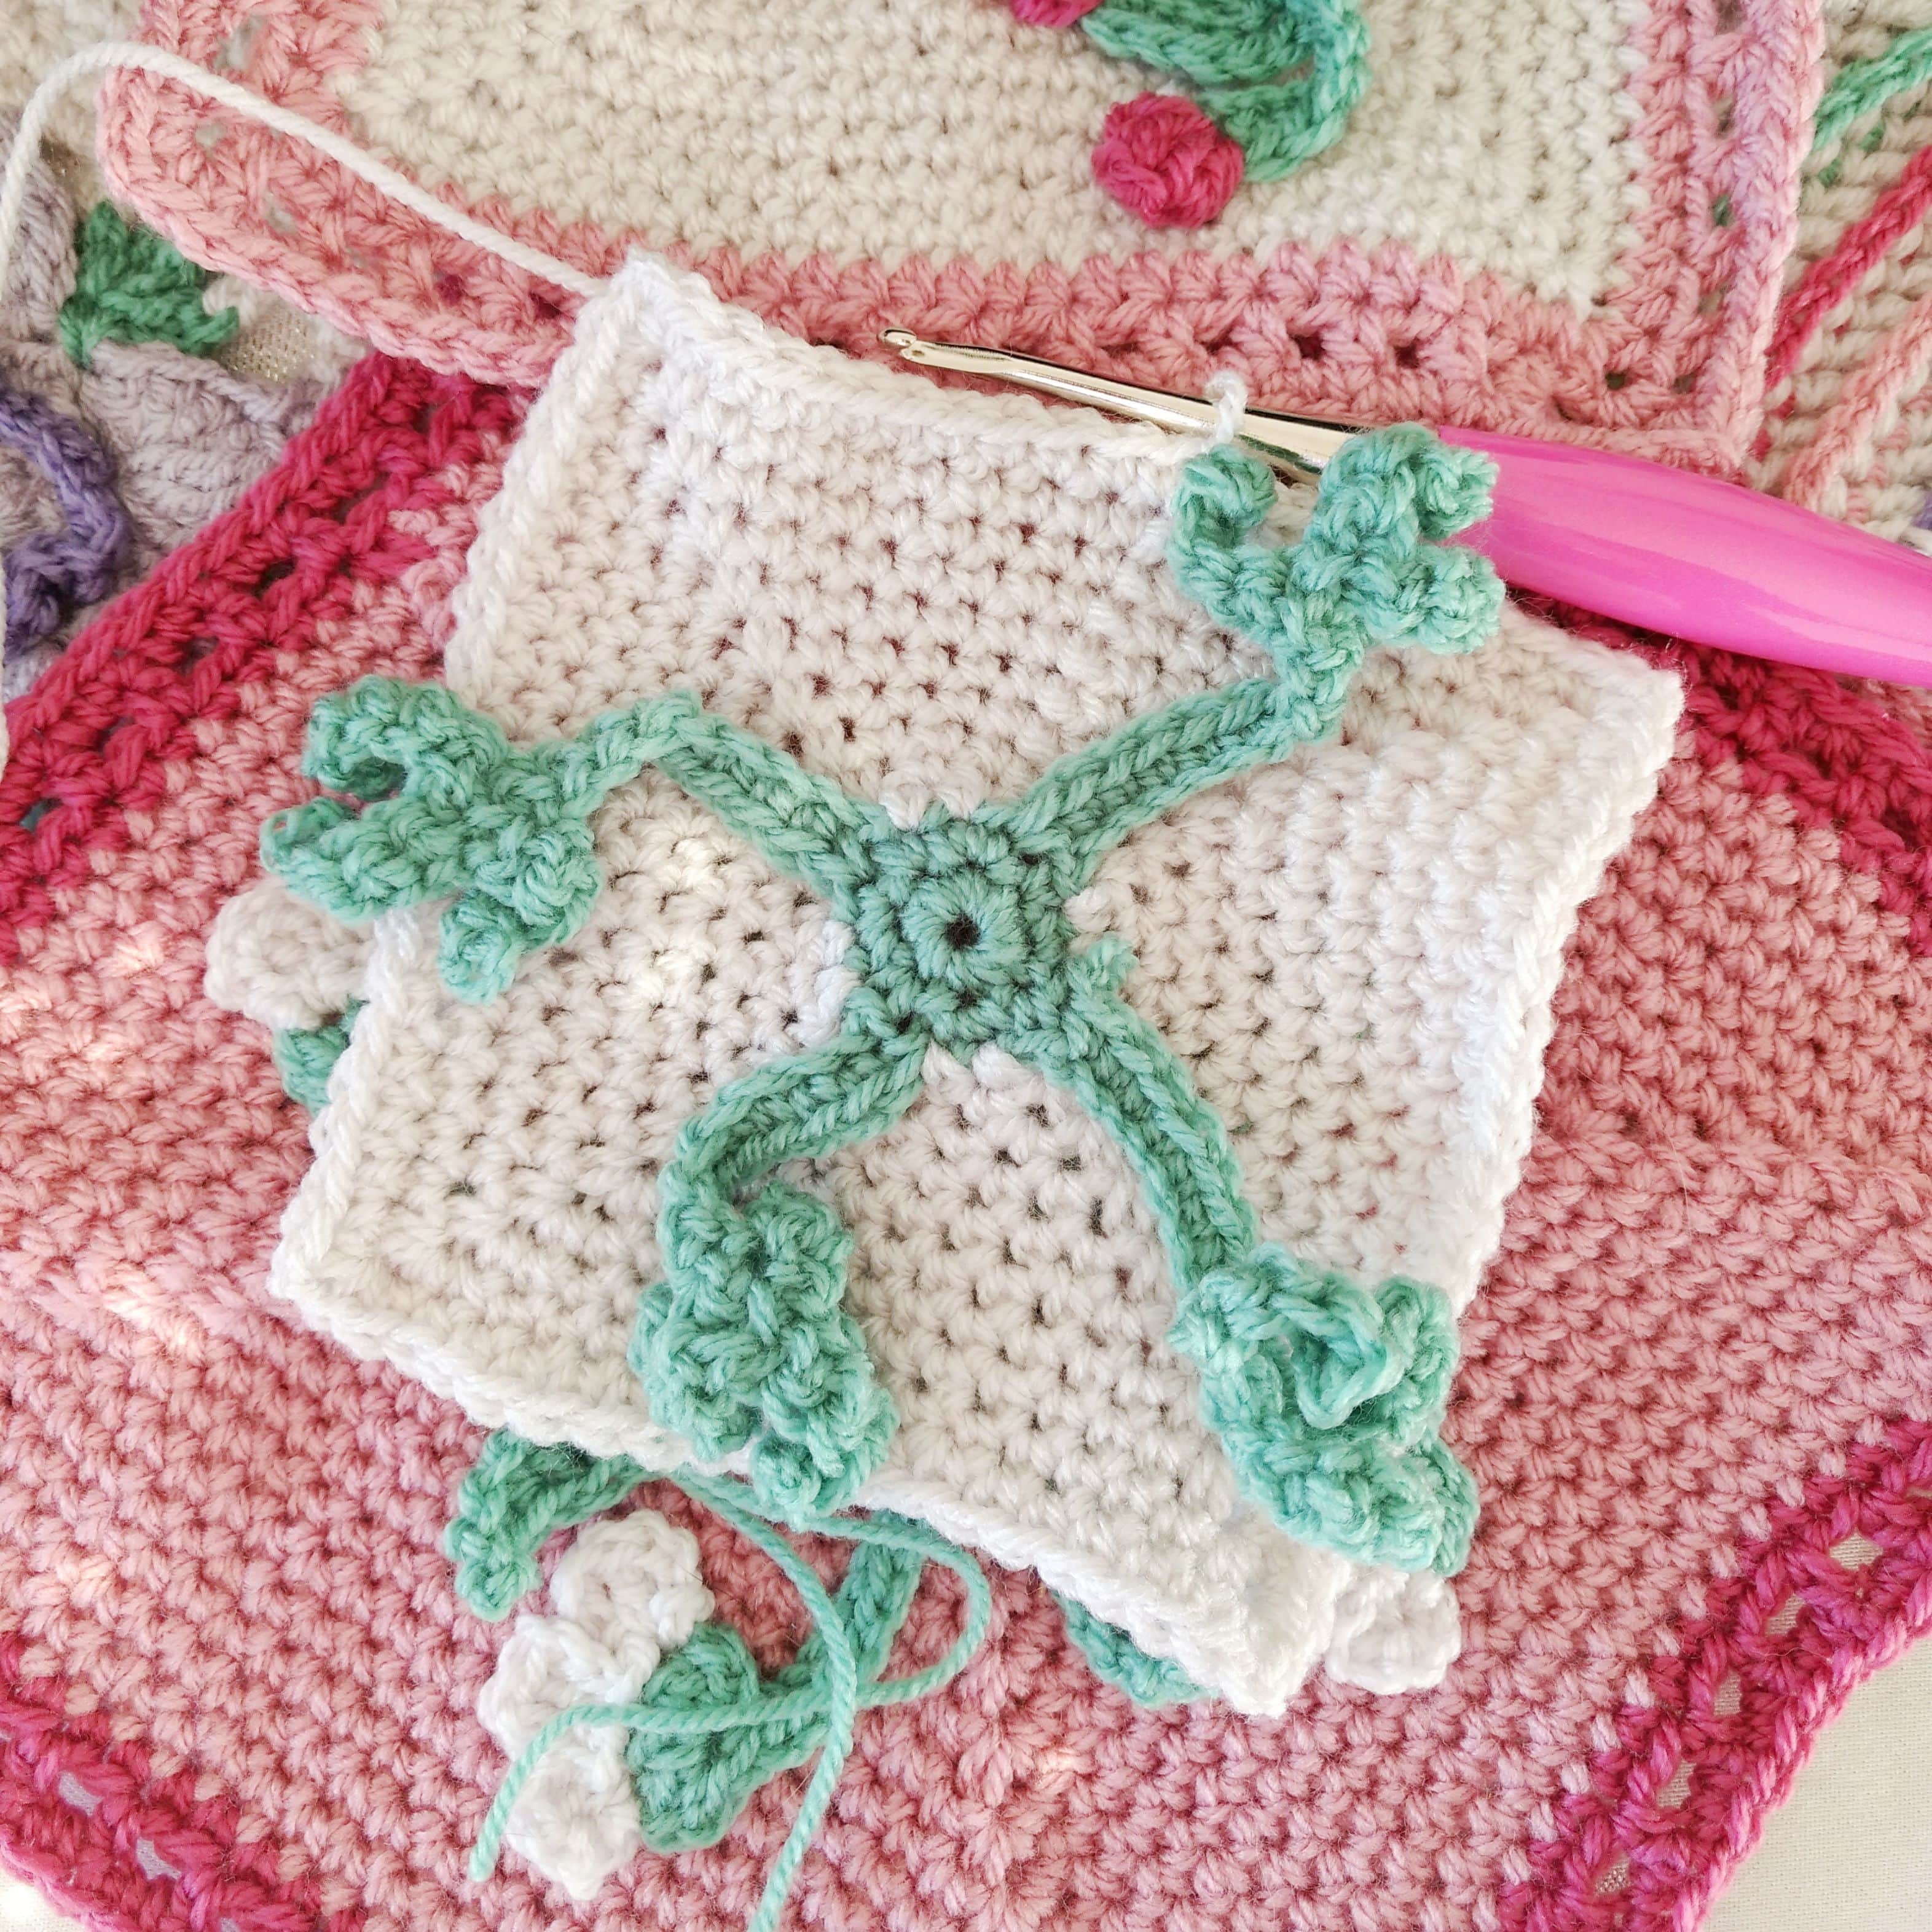 Berries Granny Square - Free crochet pattern - 2023 blanket - crochet cloudberry